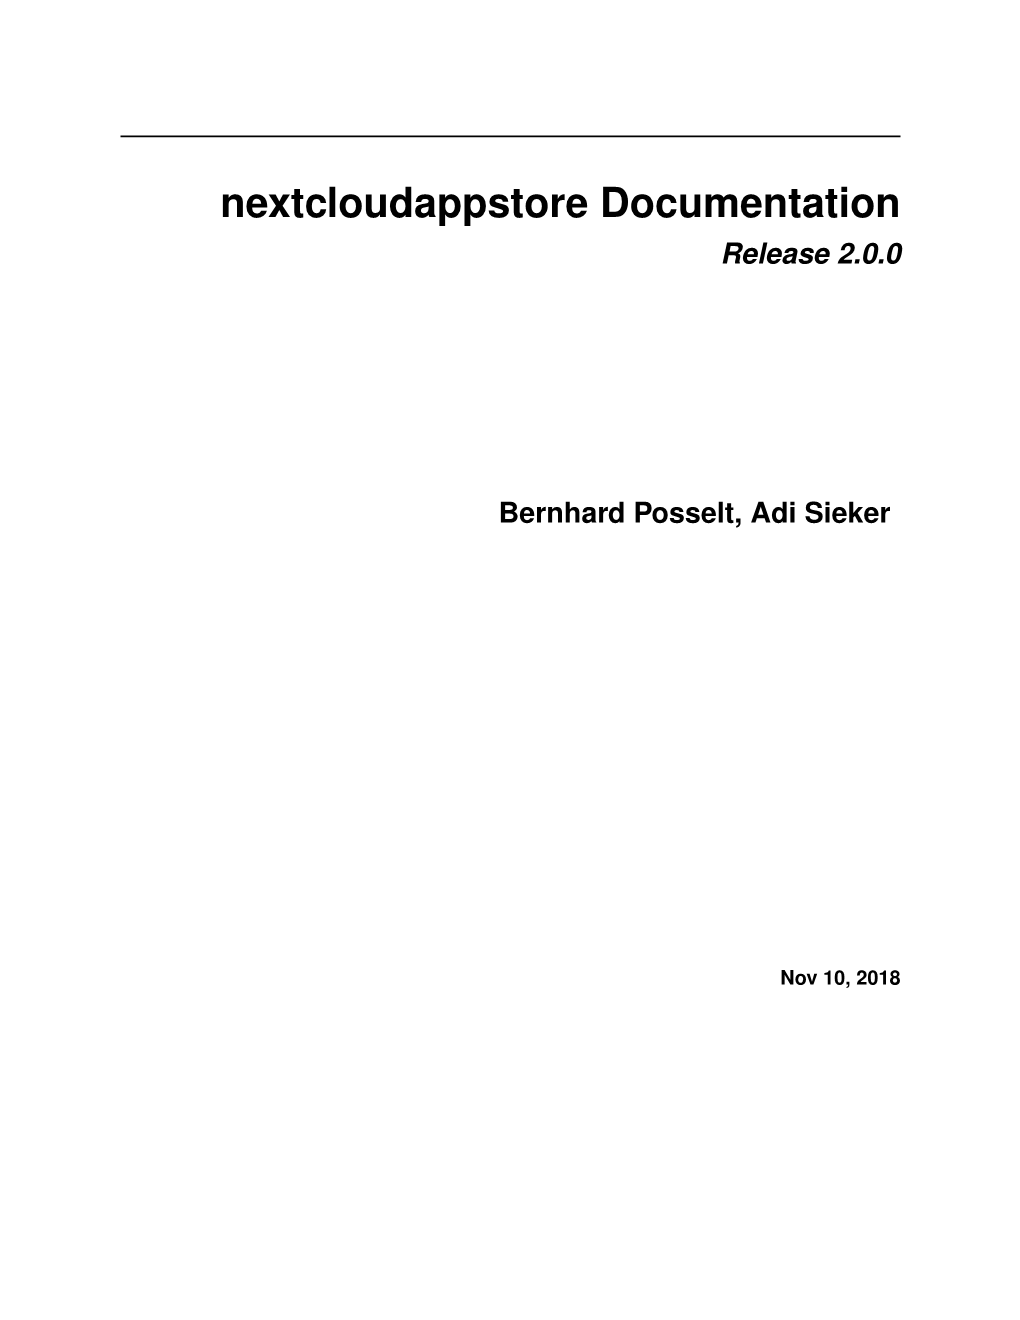 Nextcloudappstore Documentation Release 2.0.0